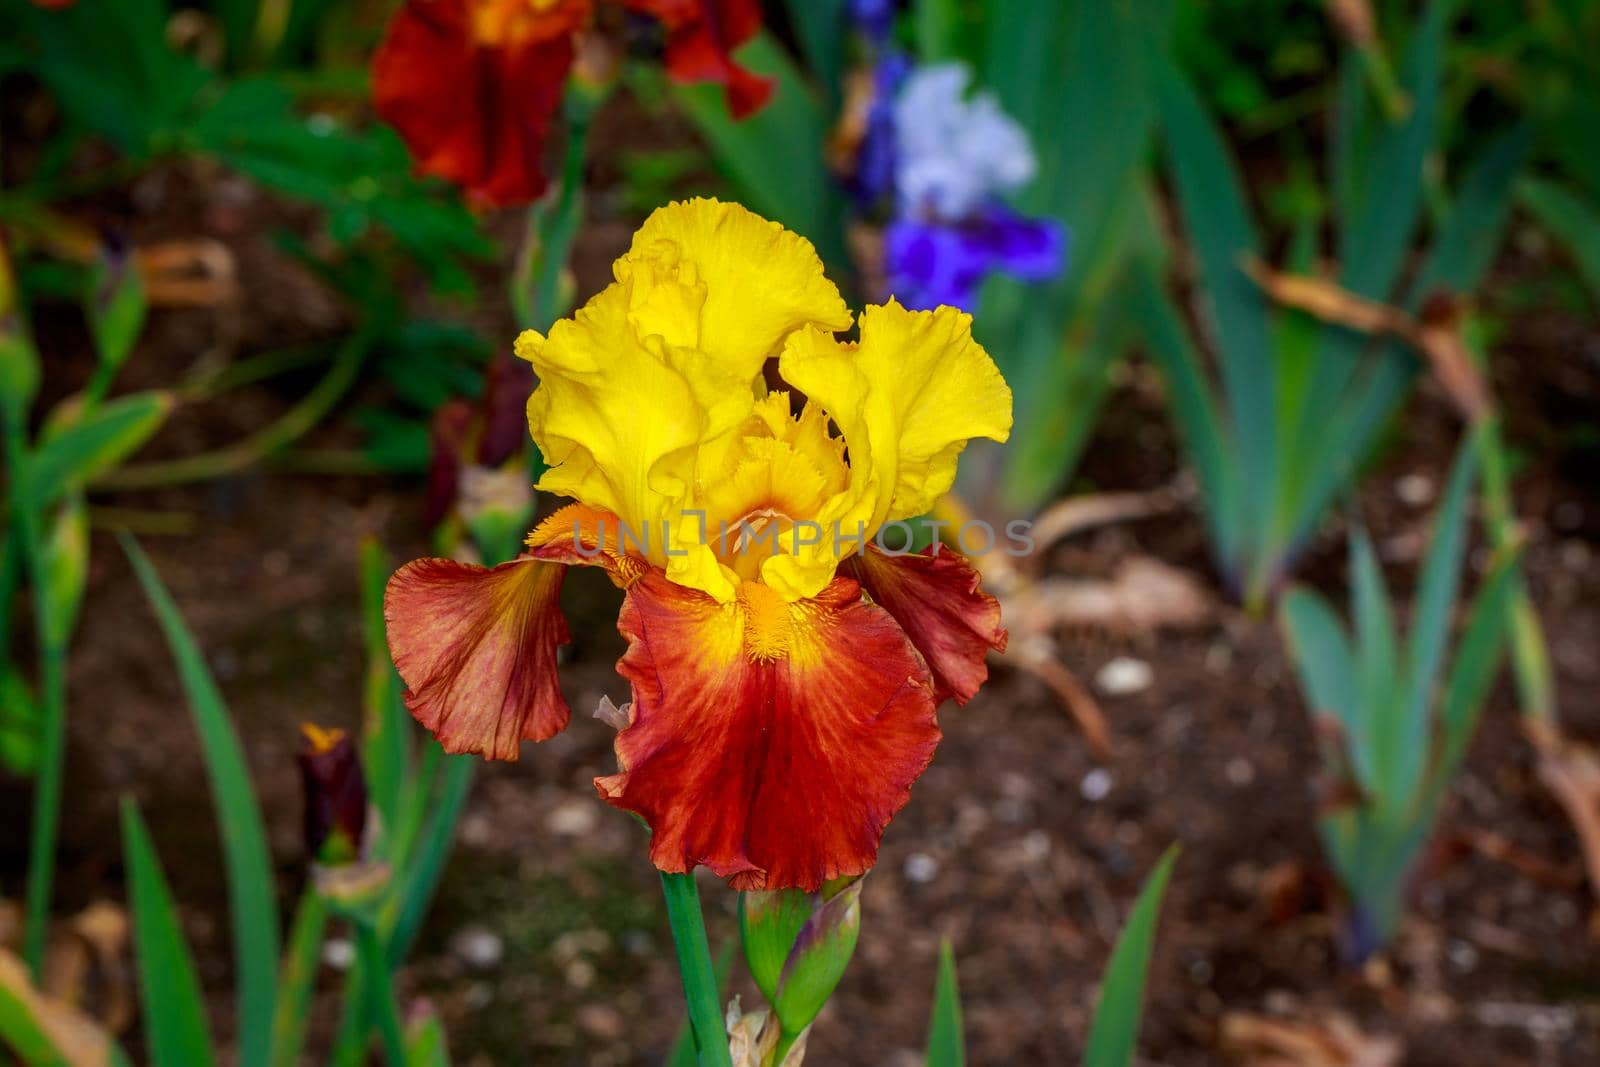 Bearded Iris Flower by gepeng